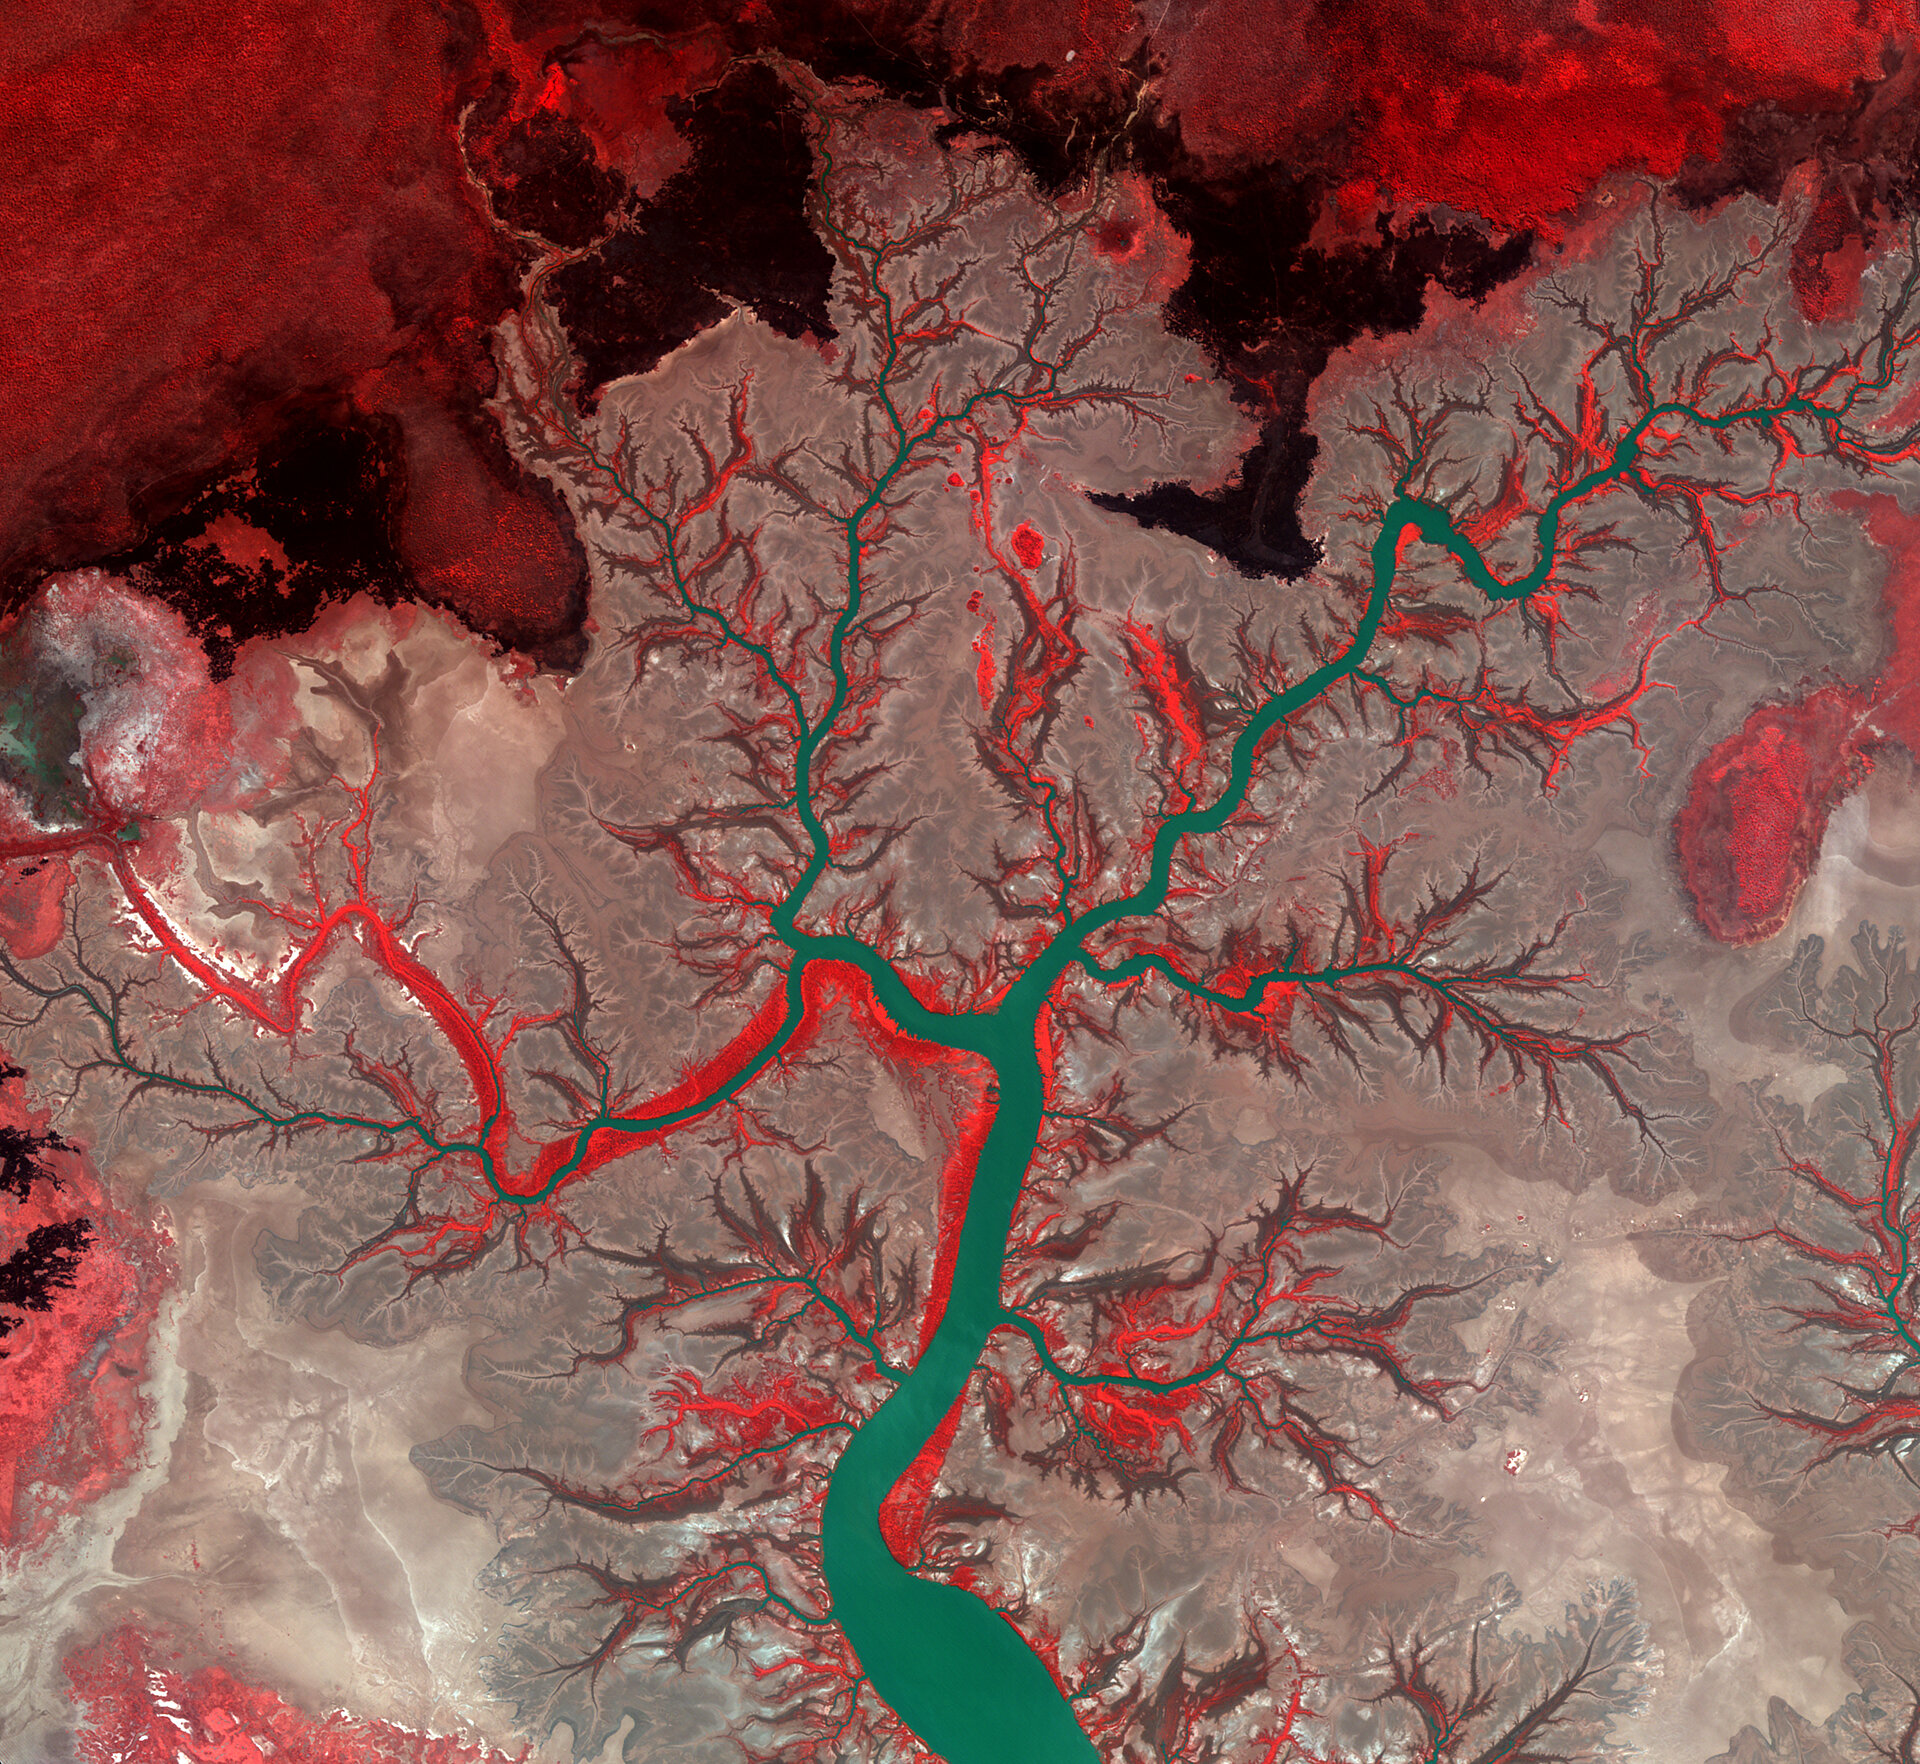 False-colour image of the Kumbunbur Creek in Australia’s Northern Territory